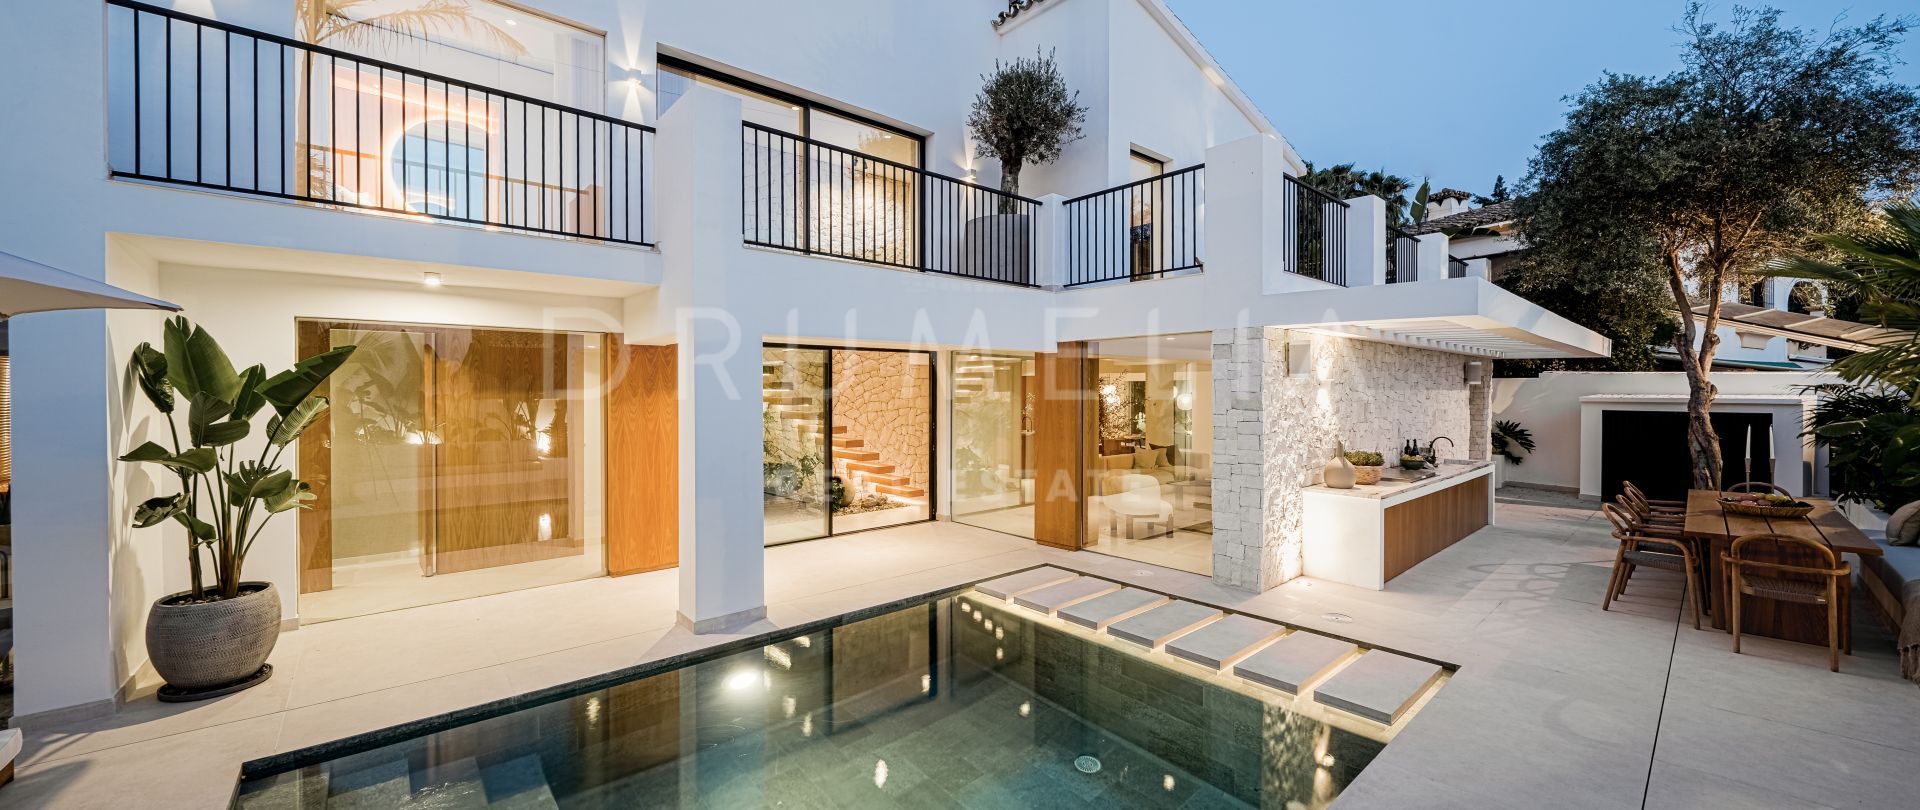 Atemberaubende, komplett renovierte Villa in bester Lage in Nueva Andalucia, Marbella